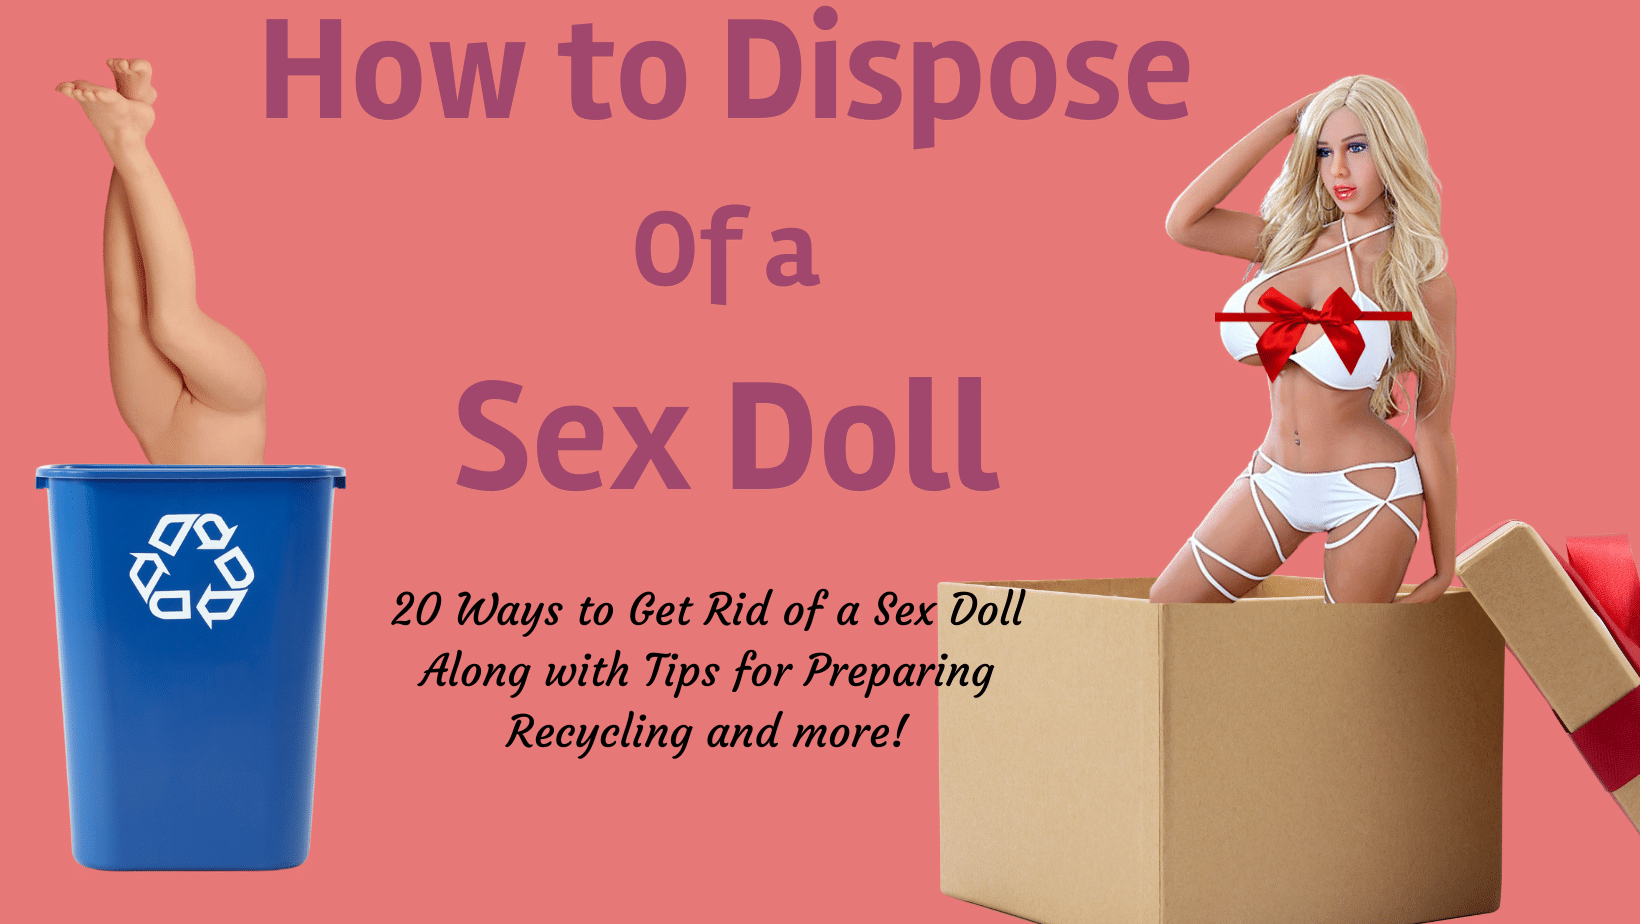 How To Dispose Of A Sex Doll I Bedbible.com